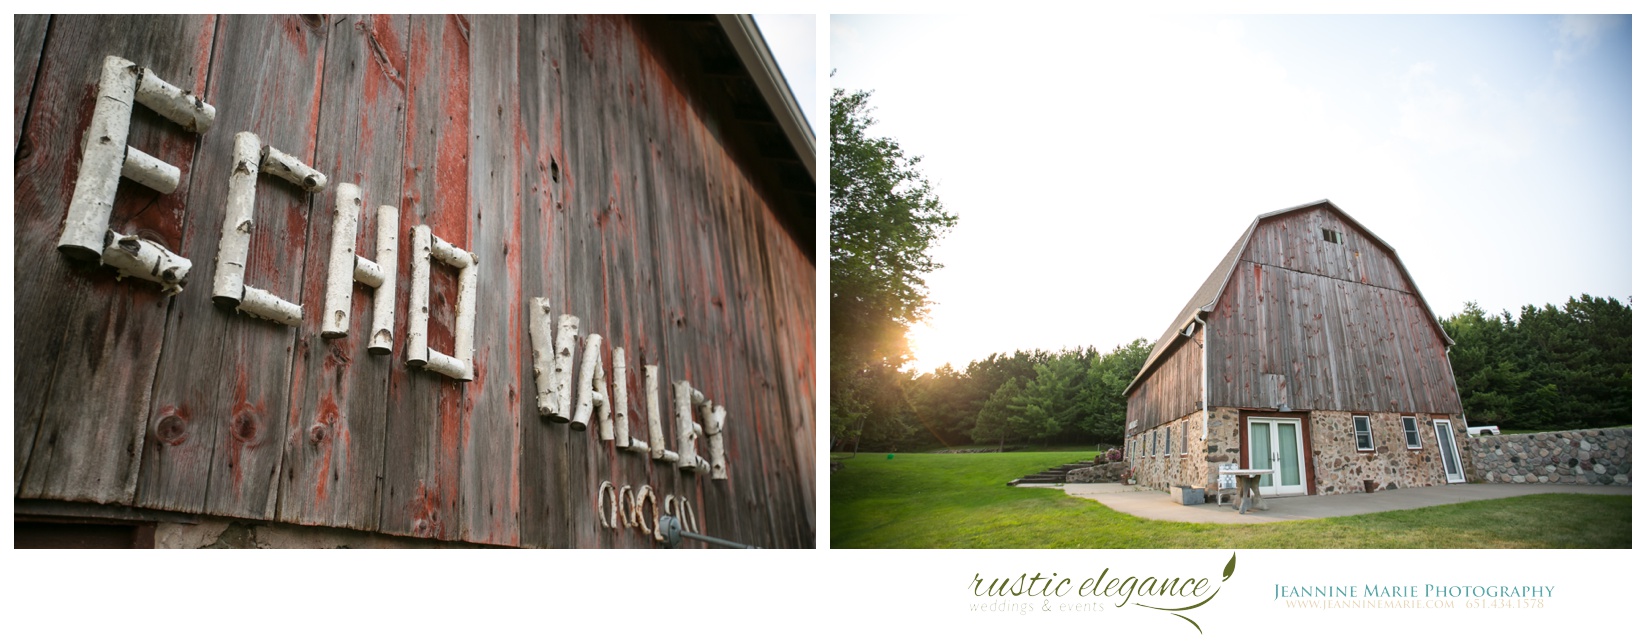 Echo Valley Barn, Wisconsin Barn Weddings,Twin Cities Photographer, Jeannine Marie Photography_0568